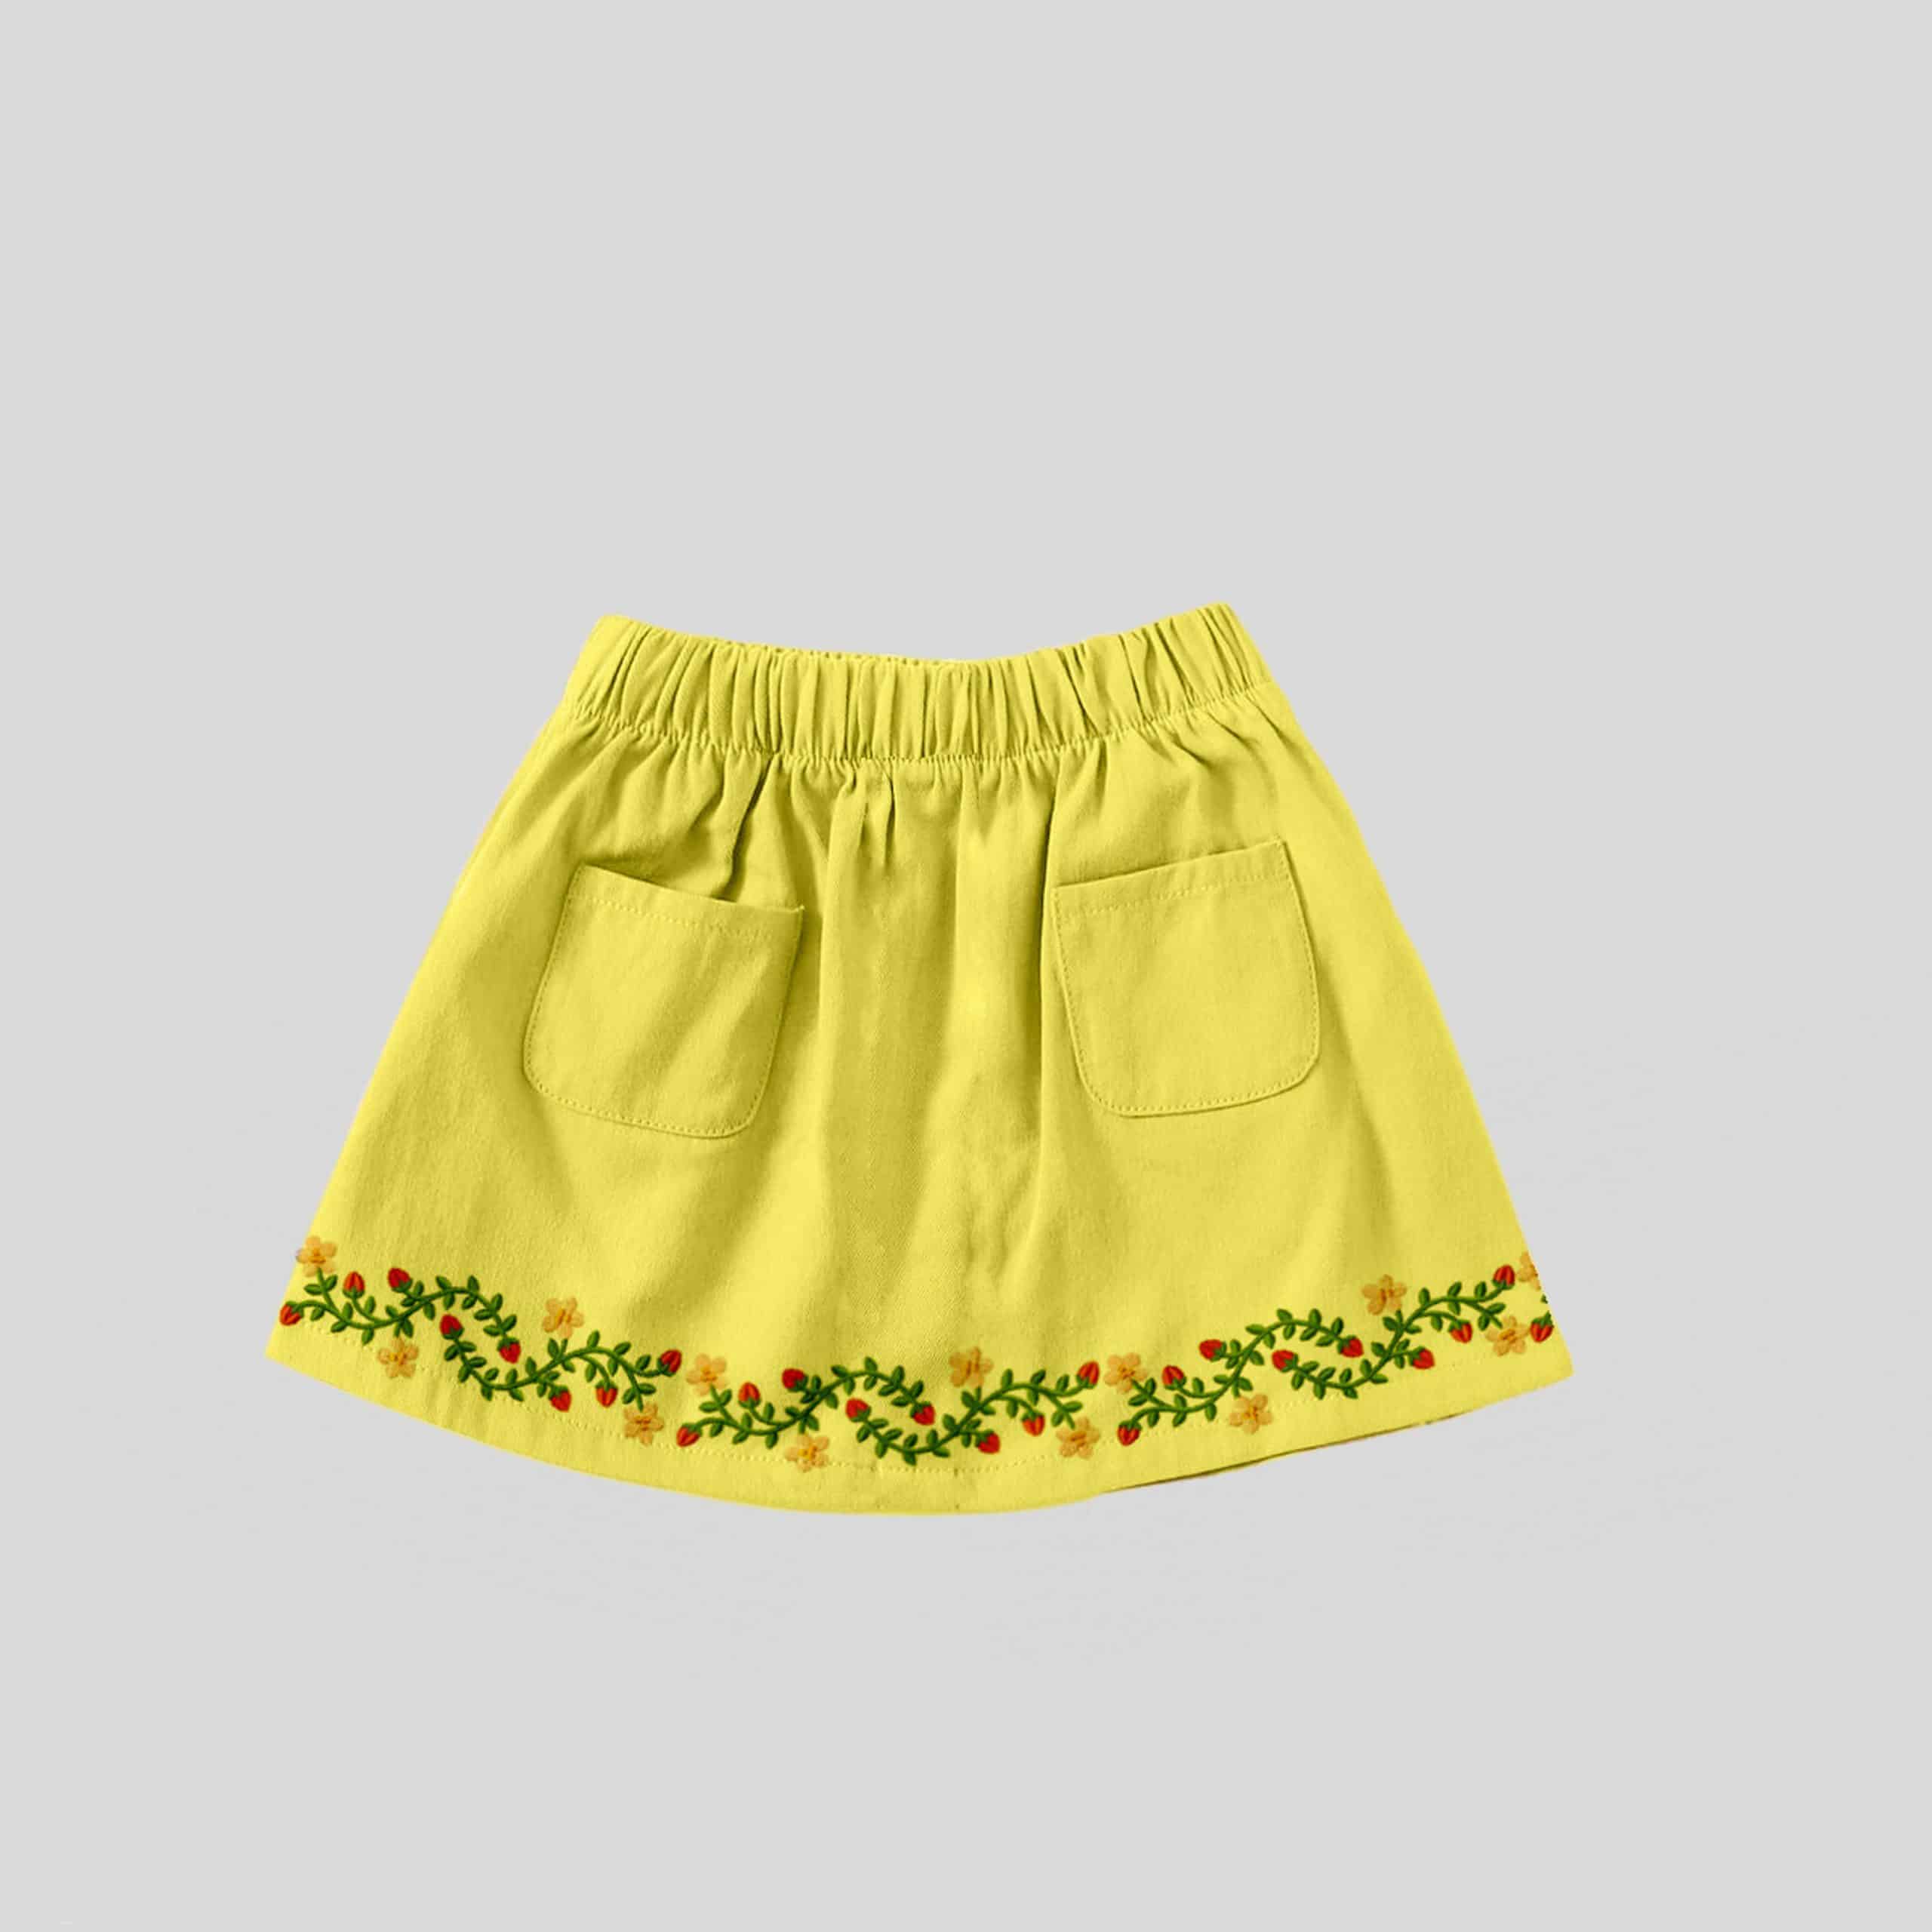 Girls Yellow Skirt with a Floral Print Hemline - RKFCW345